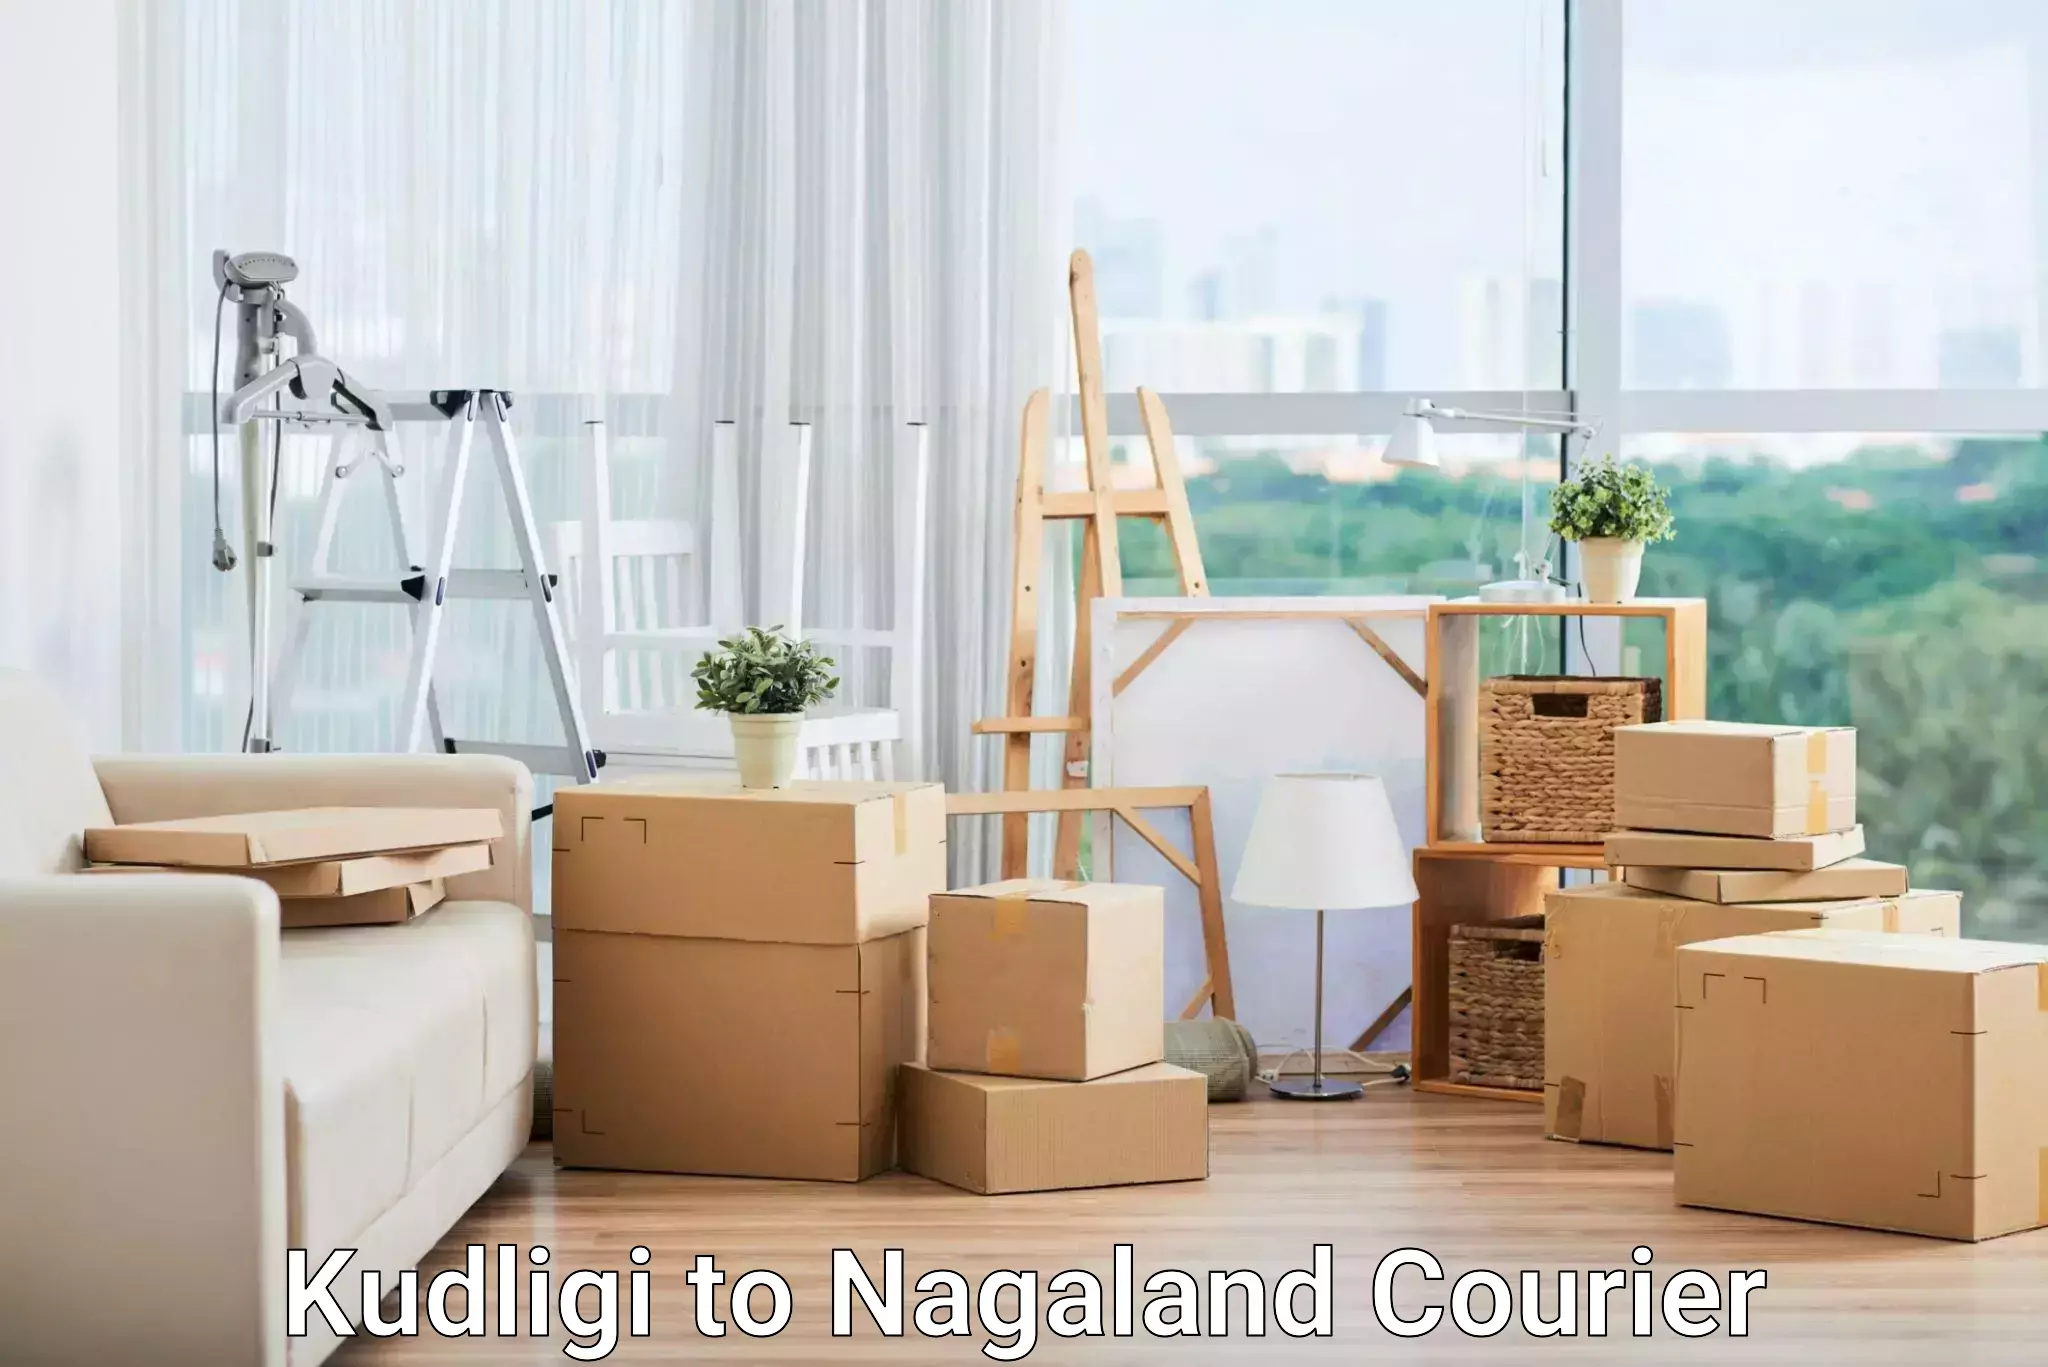 State-of-the-art courier technology Kudligi to Nagaland